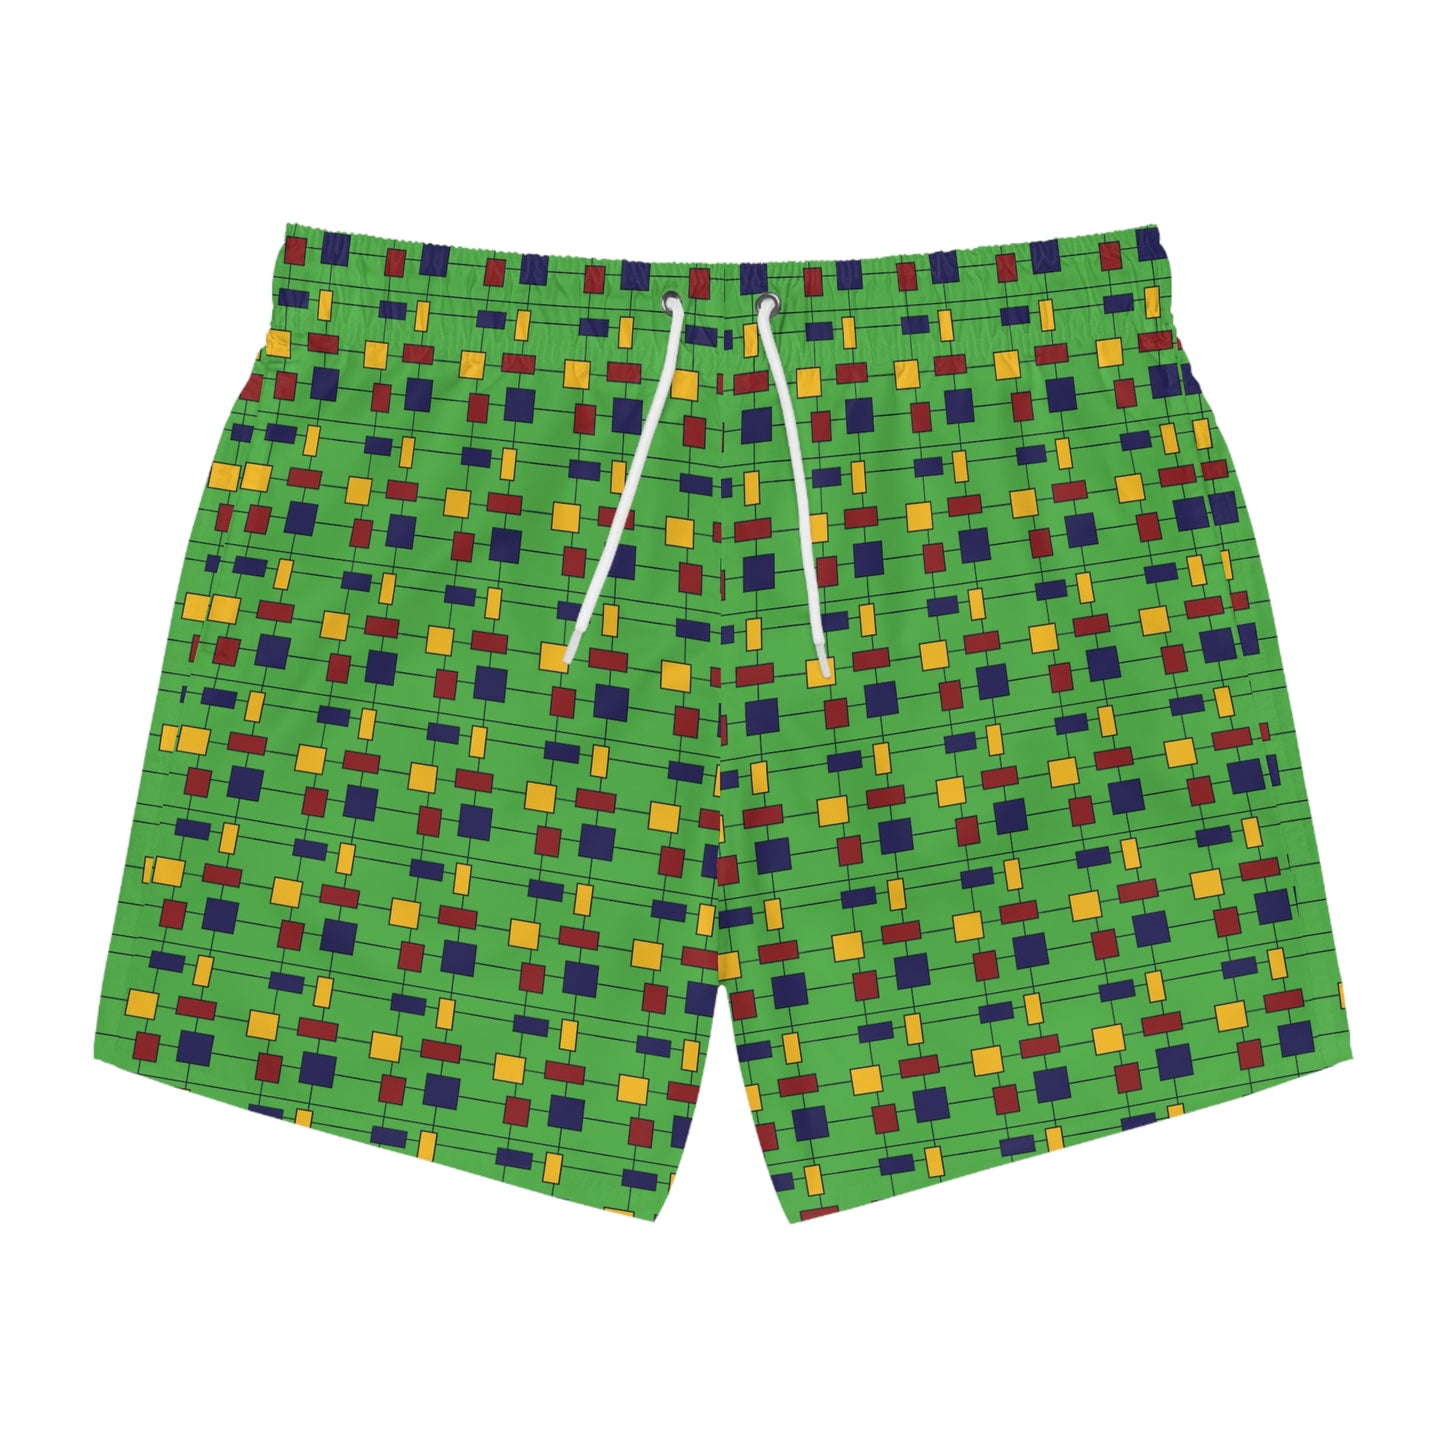 Inspired by Piet Mondrian - Kelly Green 4cbb17 - Swim Trunks